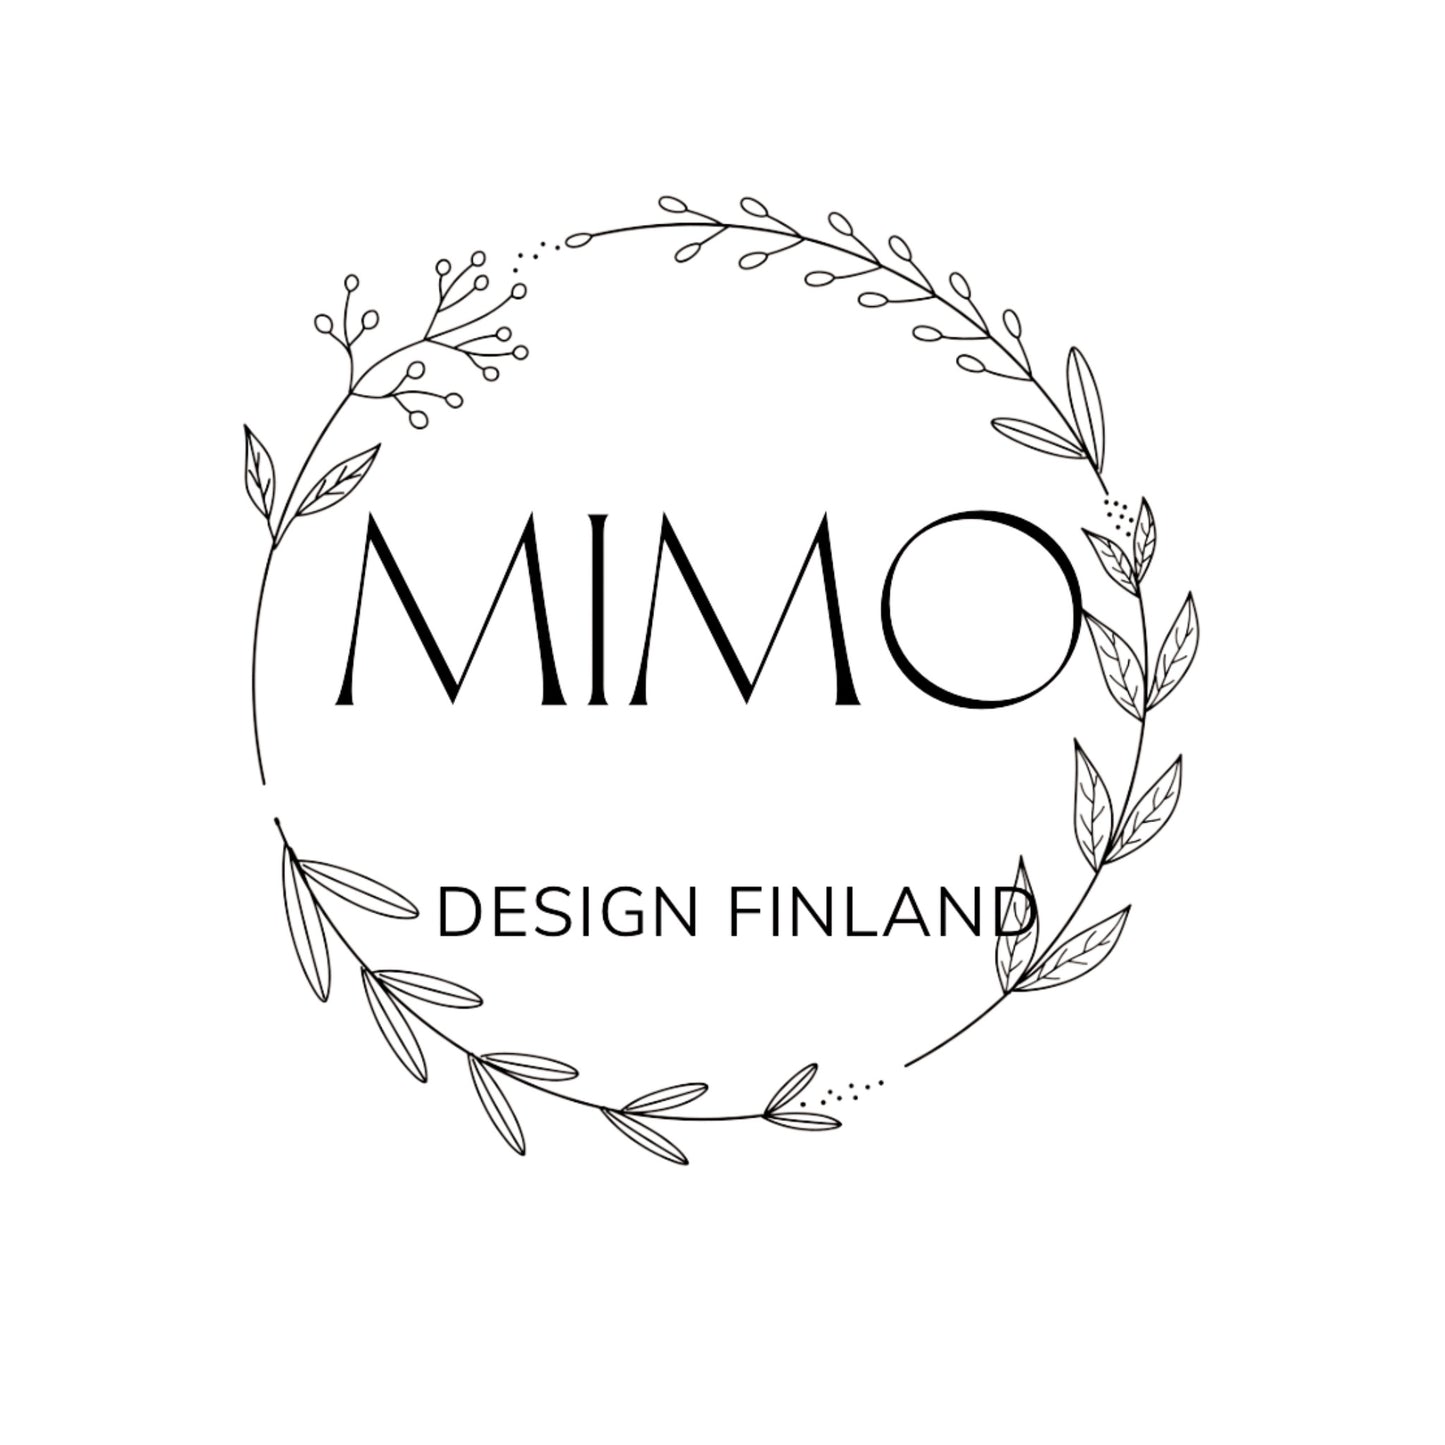 Mimo Design Finland Oy Lahjakortti